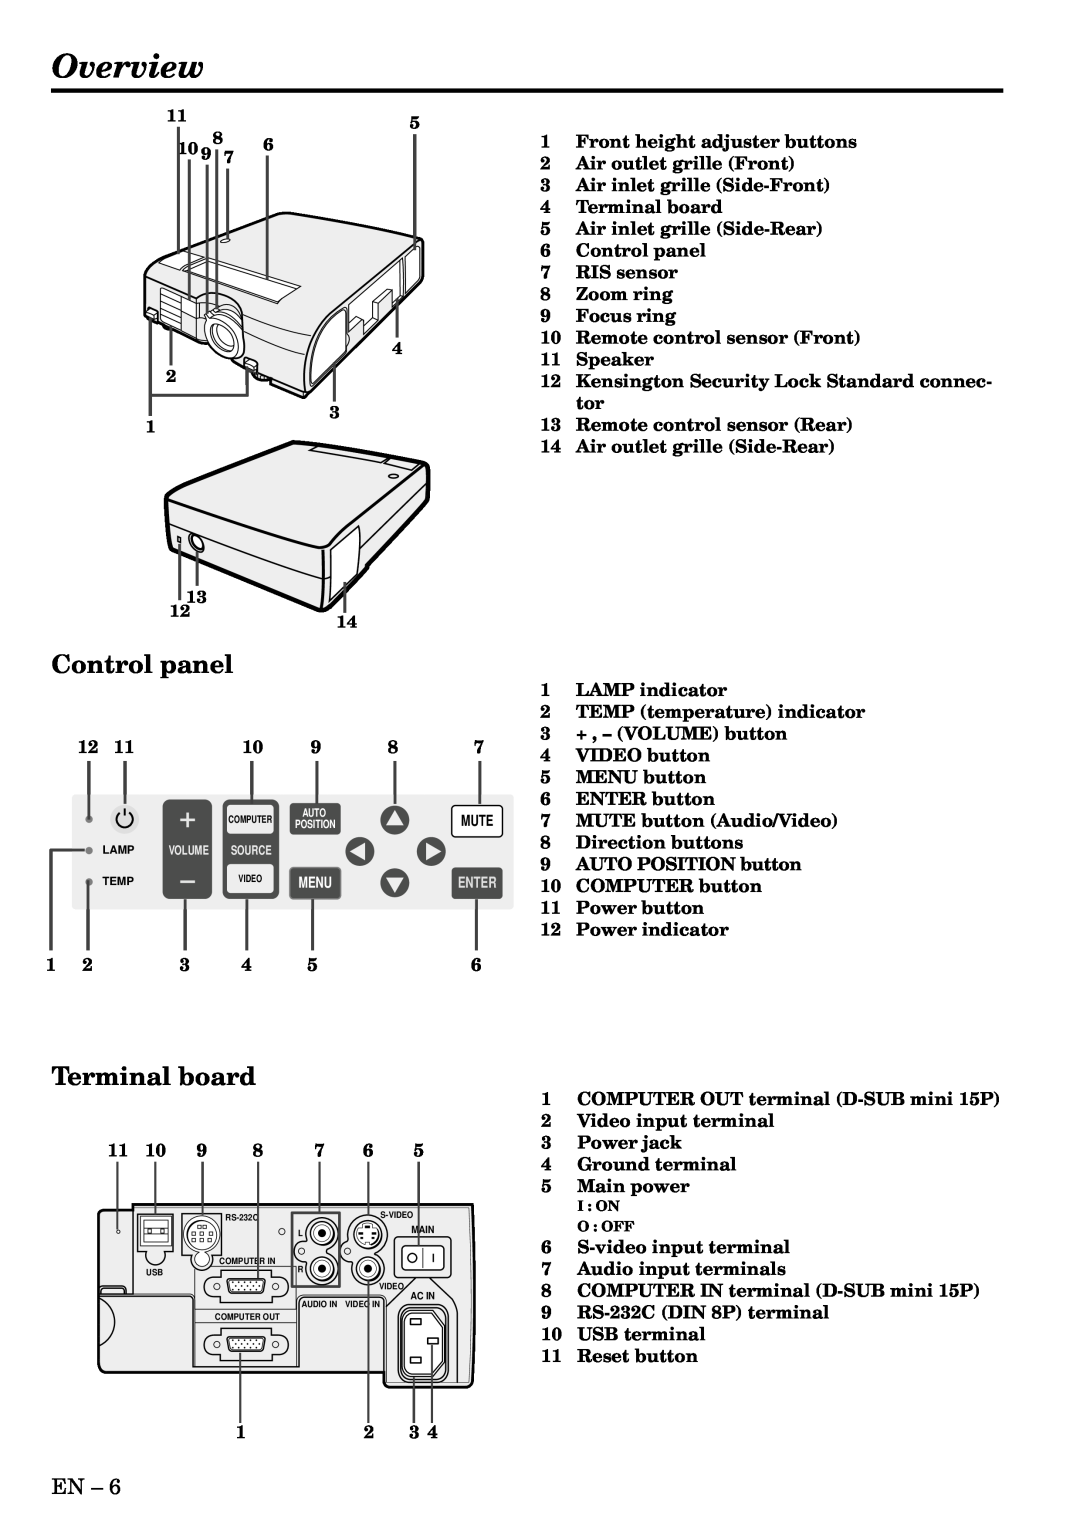 Mitsubishi Electronics XL2U user manual Overview, Control panel, Terminal board 